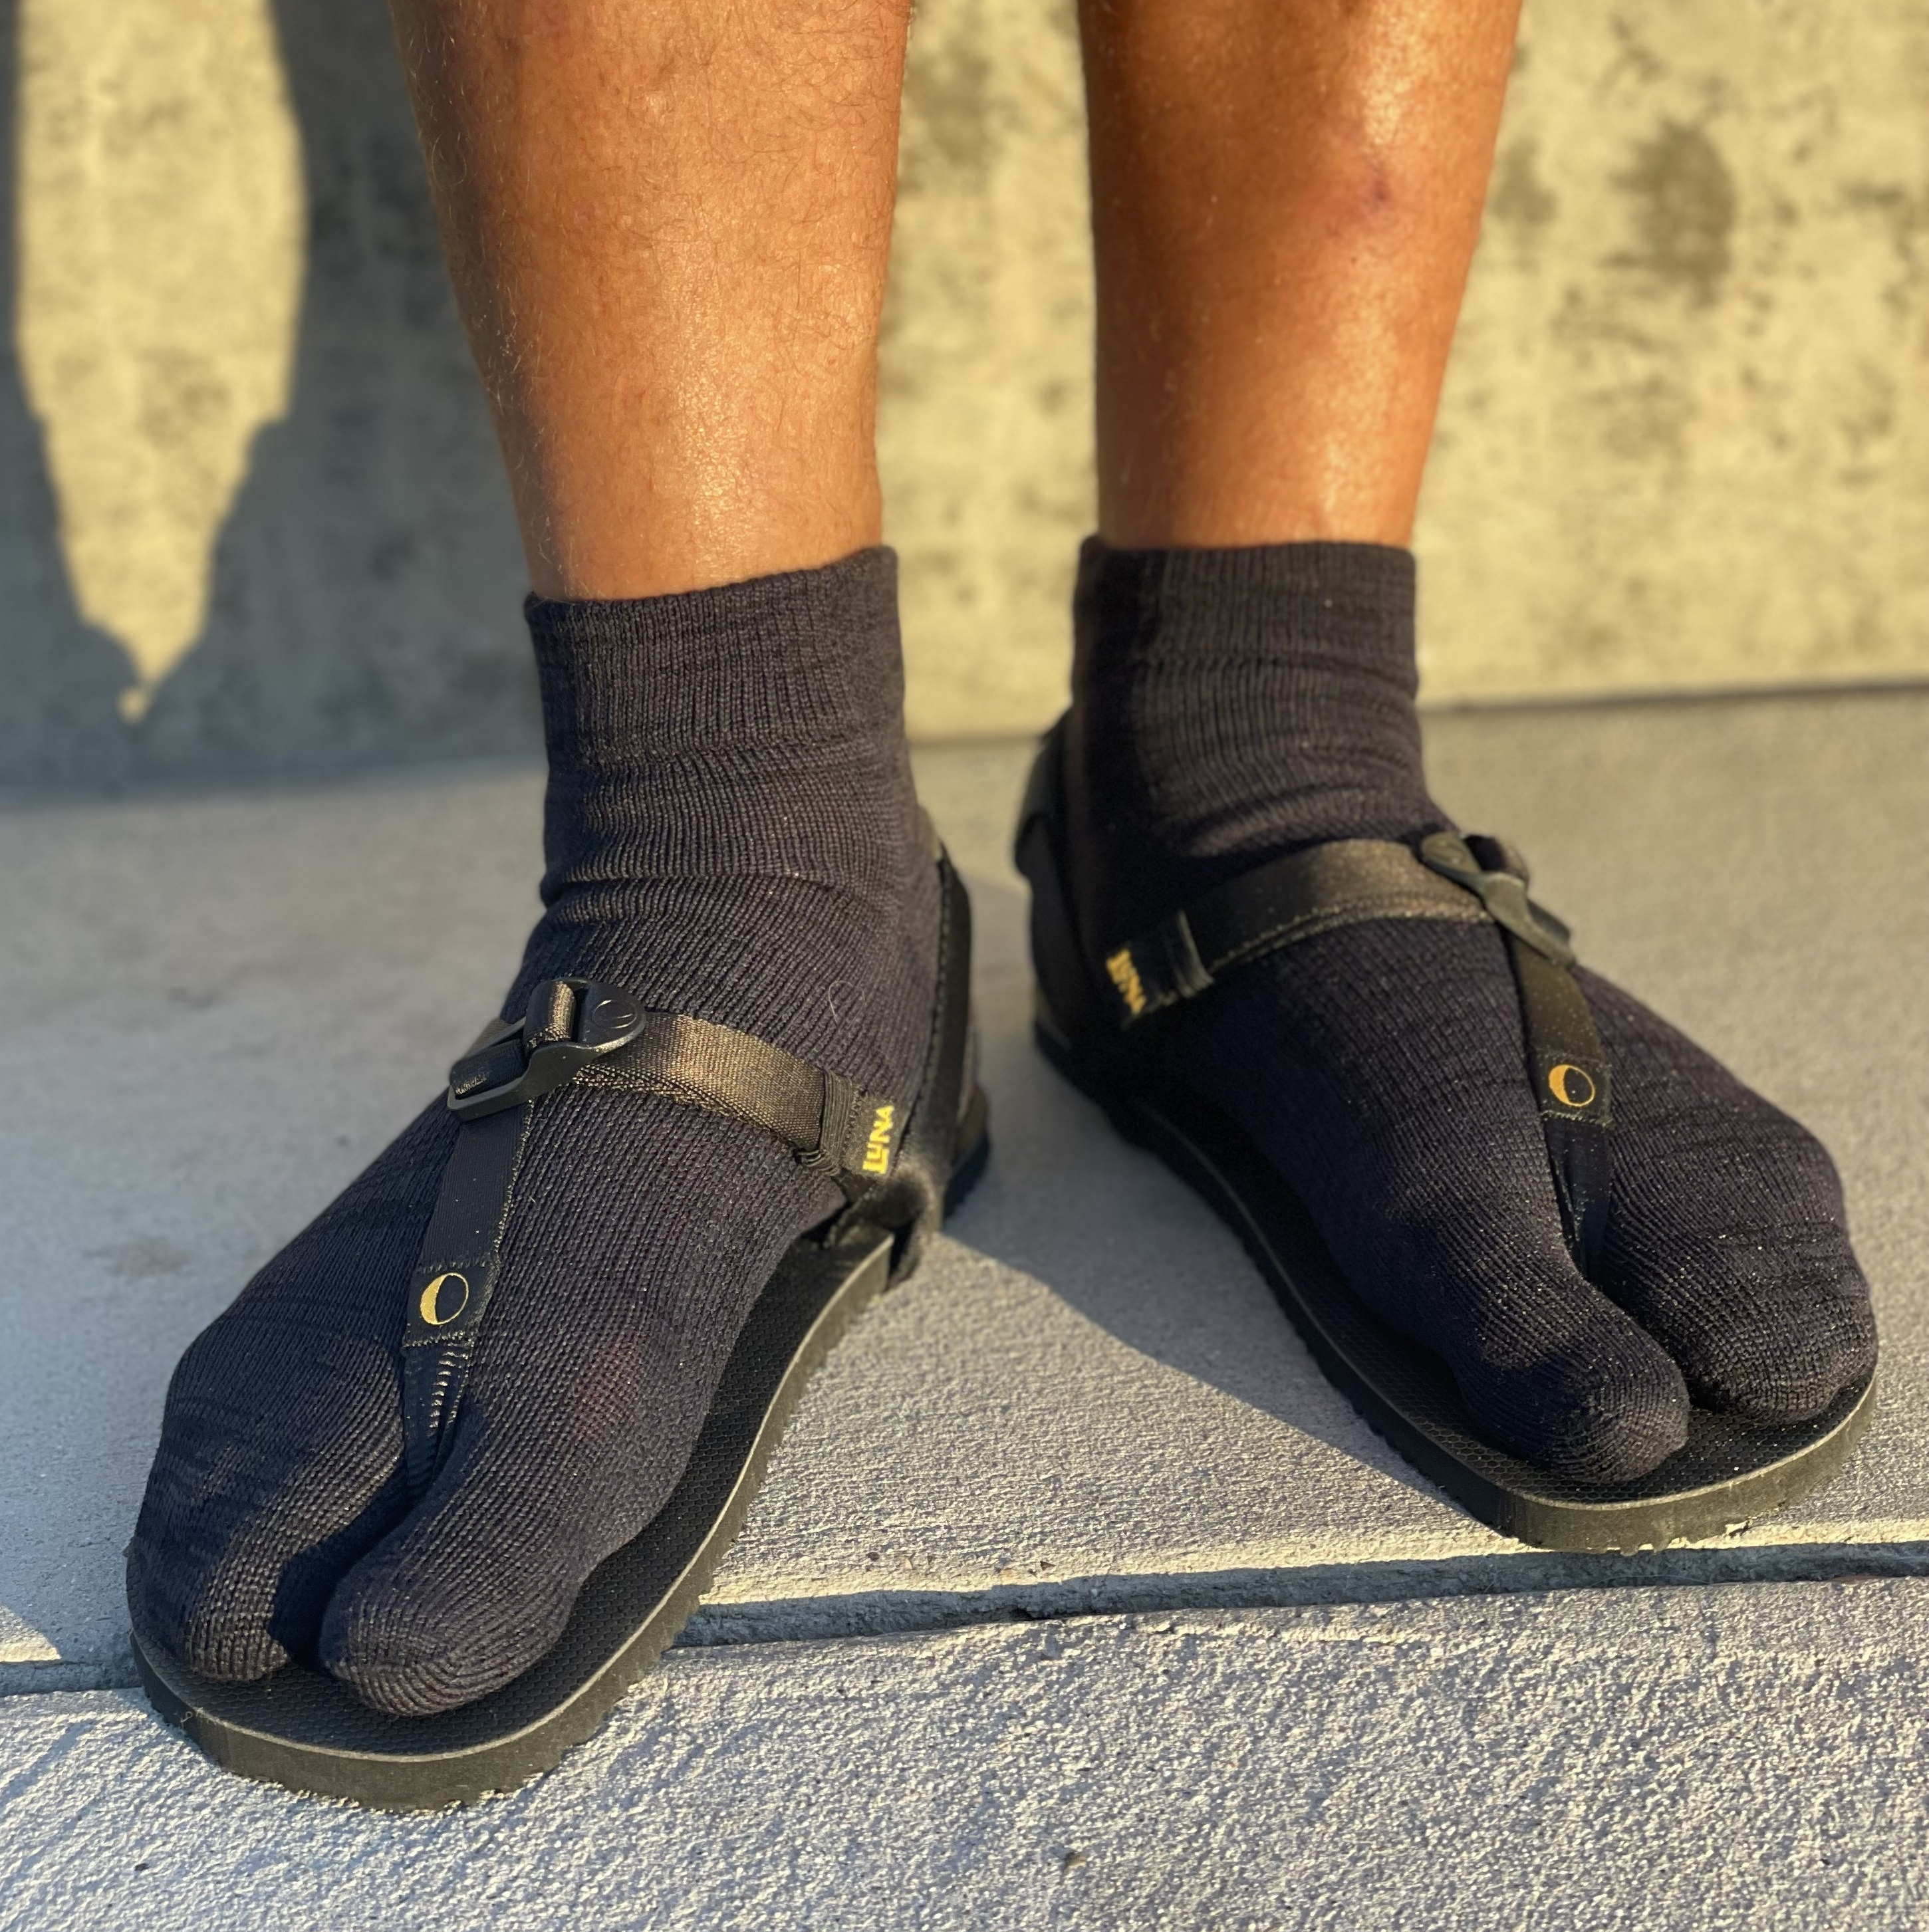 LUNA YUBI Tabi Socks - Merino Wool & Cordura - Ankle Length - LUNA Sandals